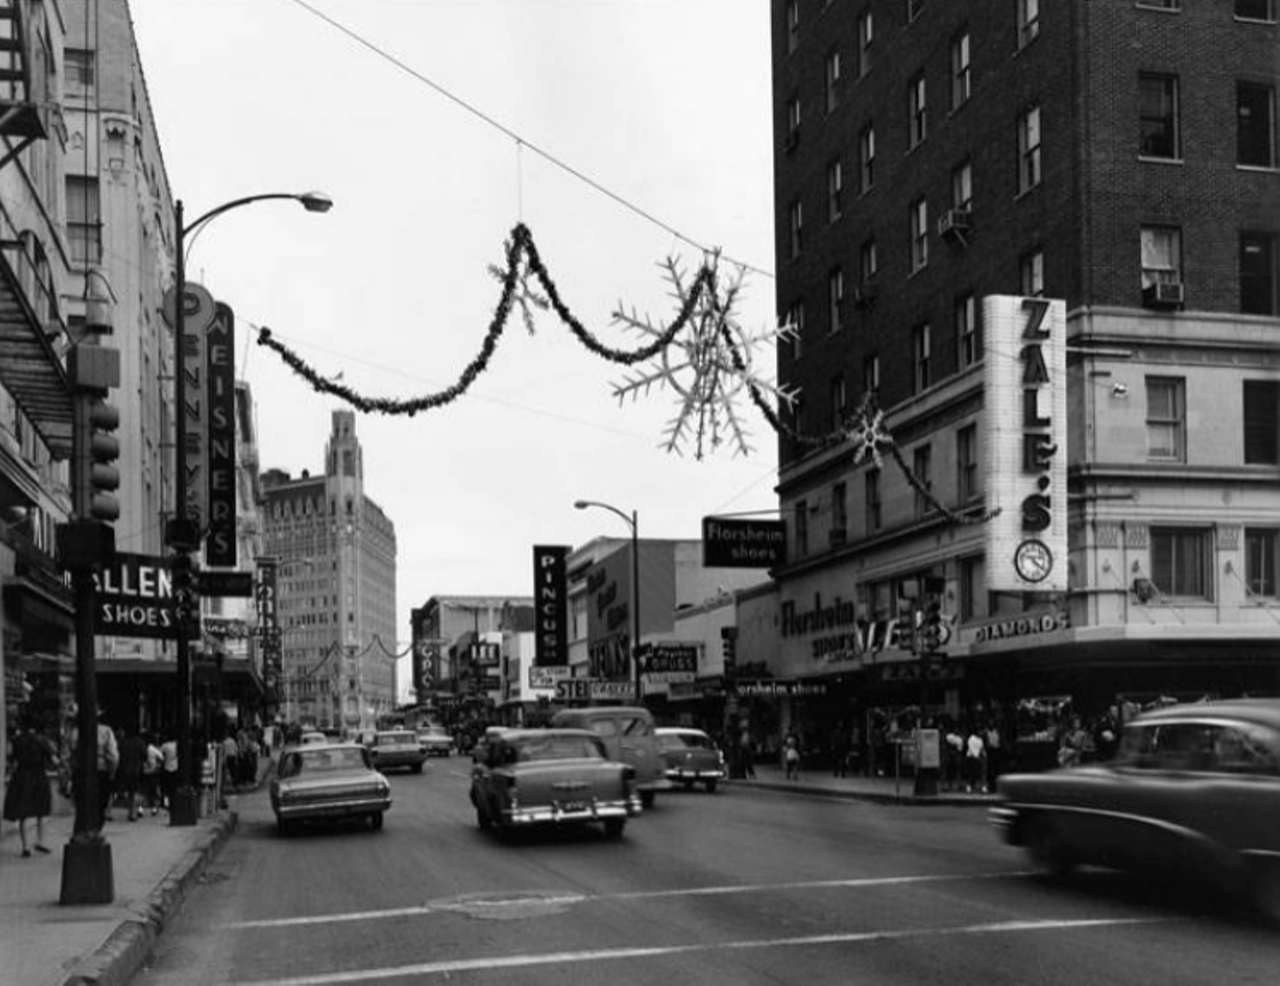 Vintage holiday photos of San Antonio Christmas — Including Joske's and